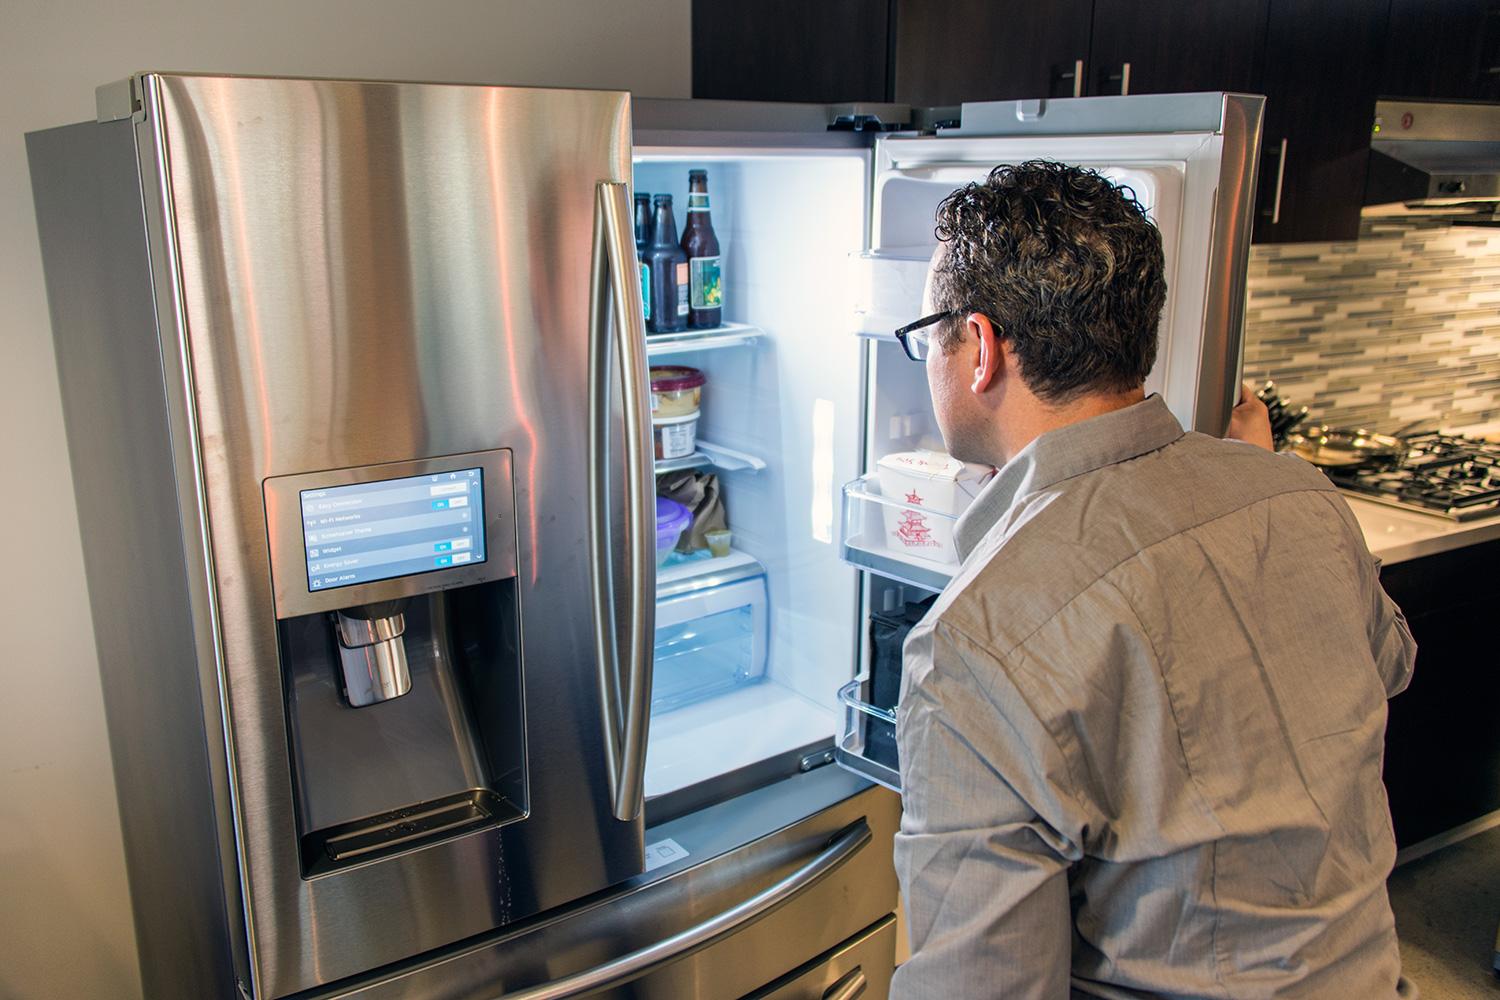 https://www.digitaltrends.com/wp-content/uploads/2014/06/digital-trends-how-we-test-refrigerators.jpg?fit=1500%2C1000&p=1